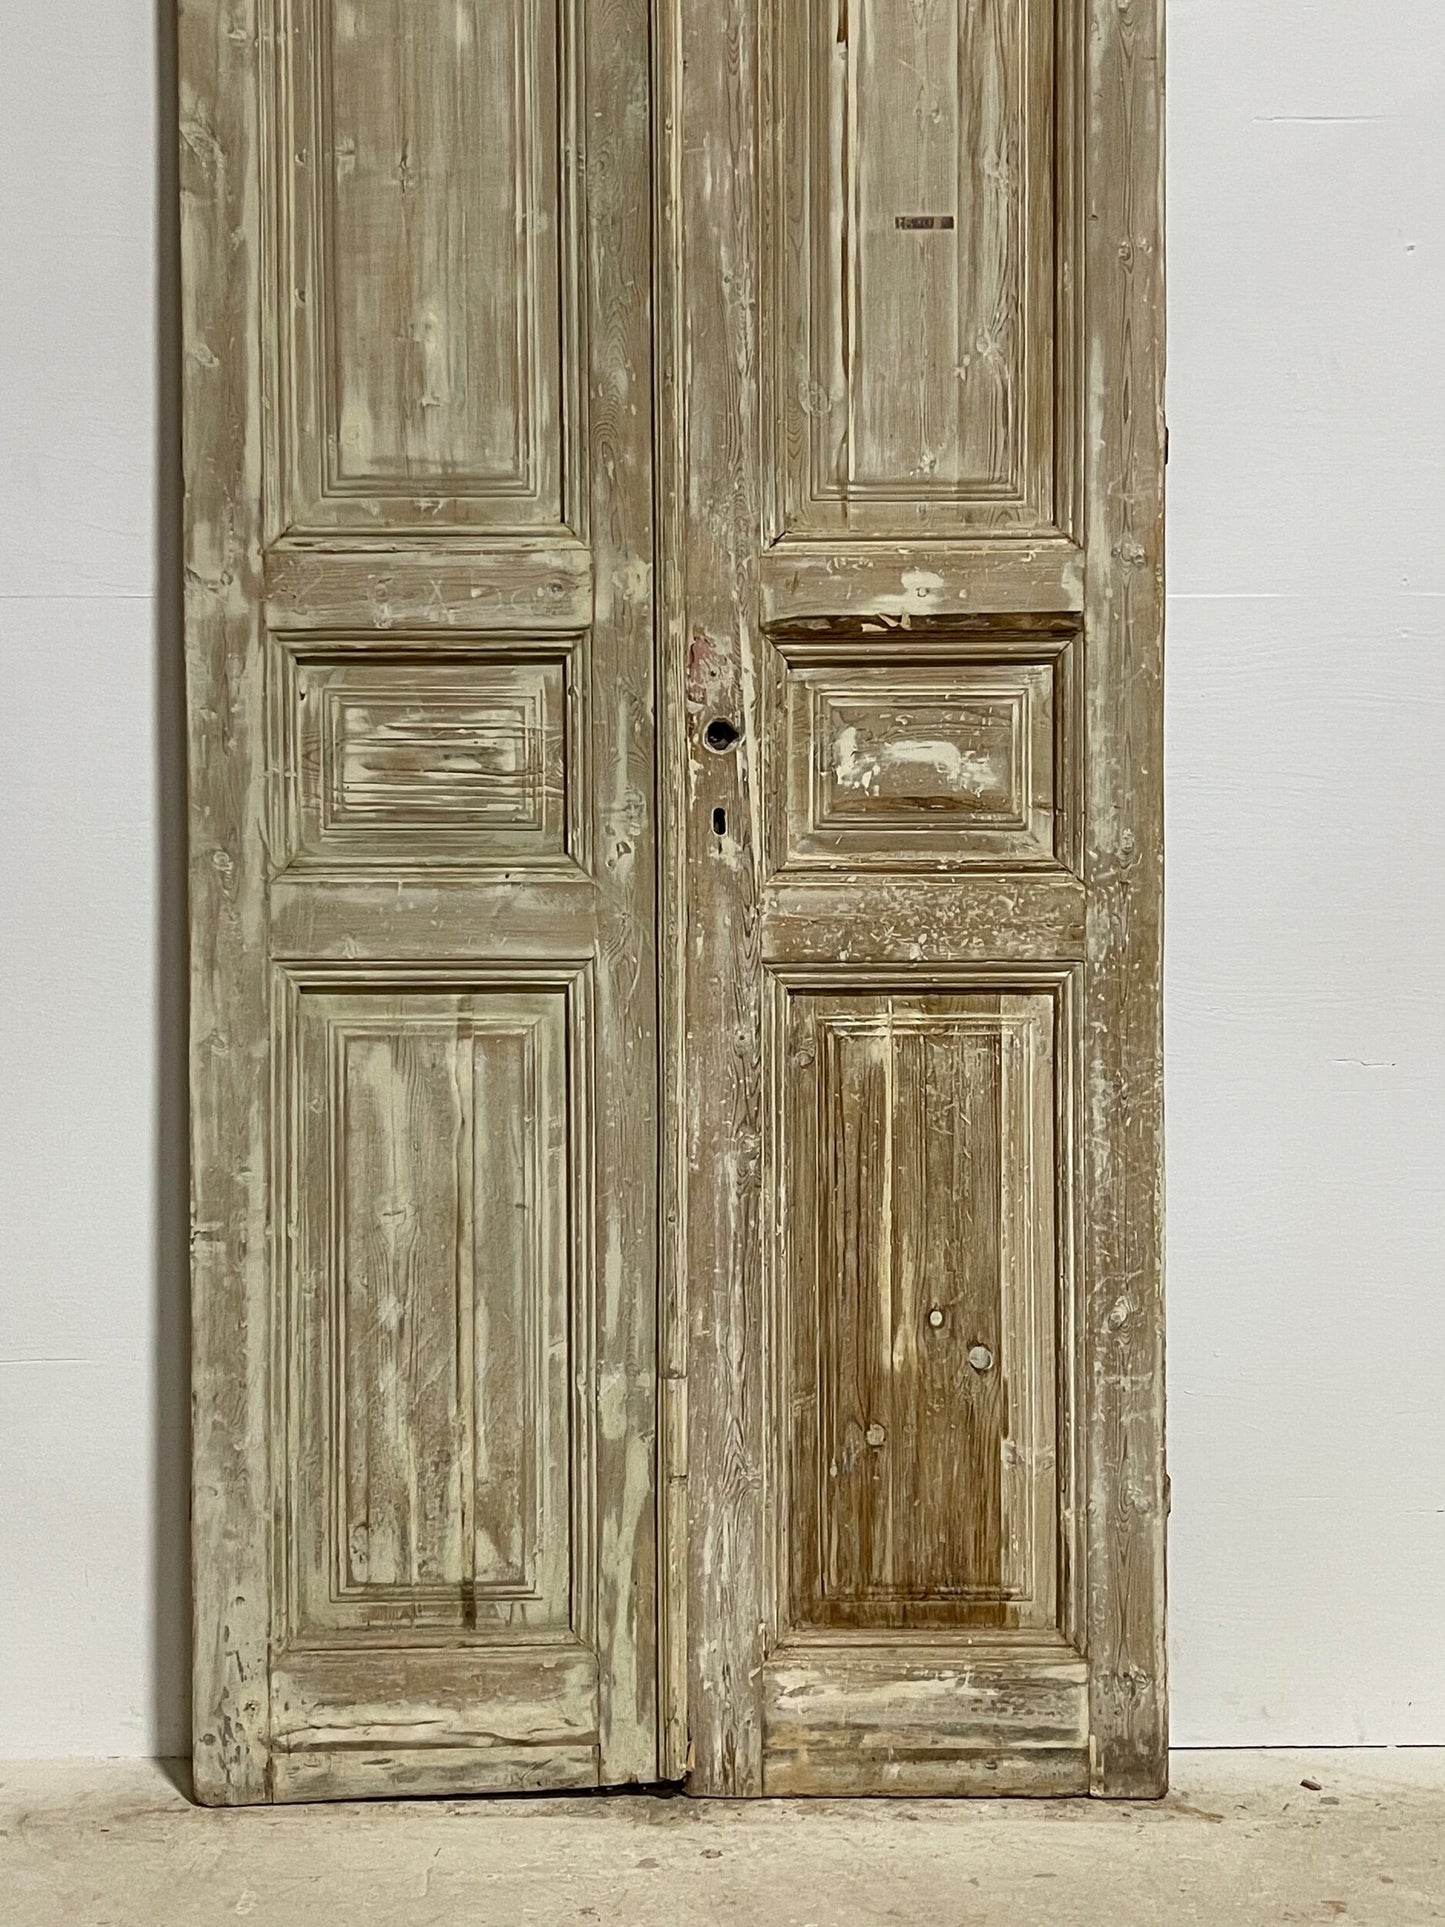 Antique French doors (93.25x38.75) H0161s